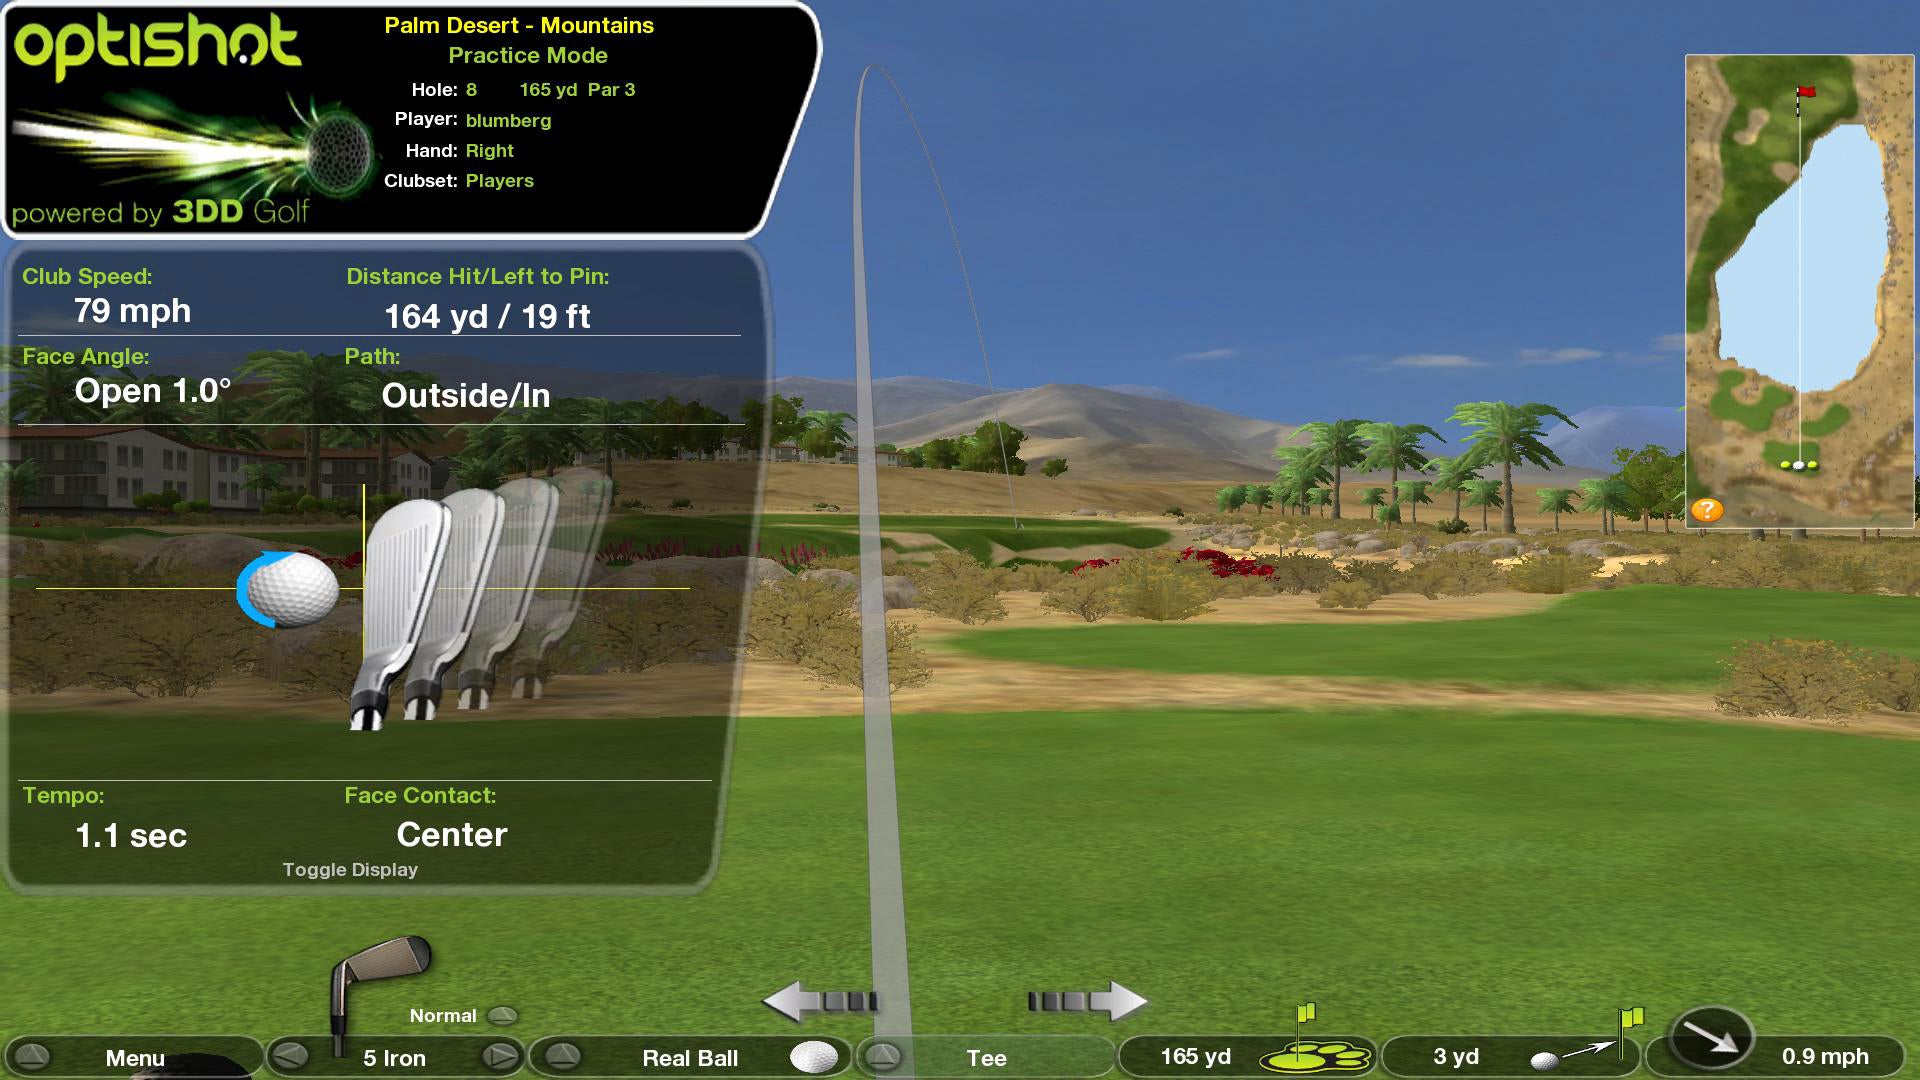 Best prices on OptiShot2 Home Golf Simulators